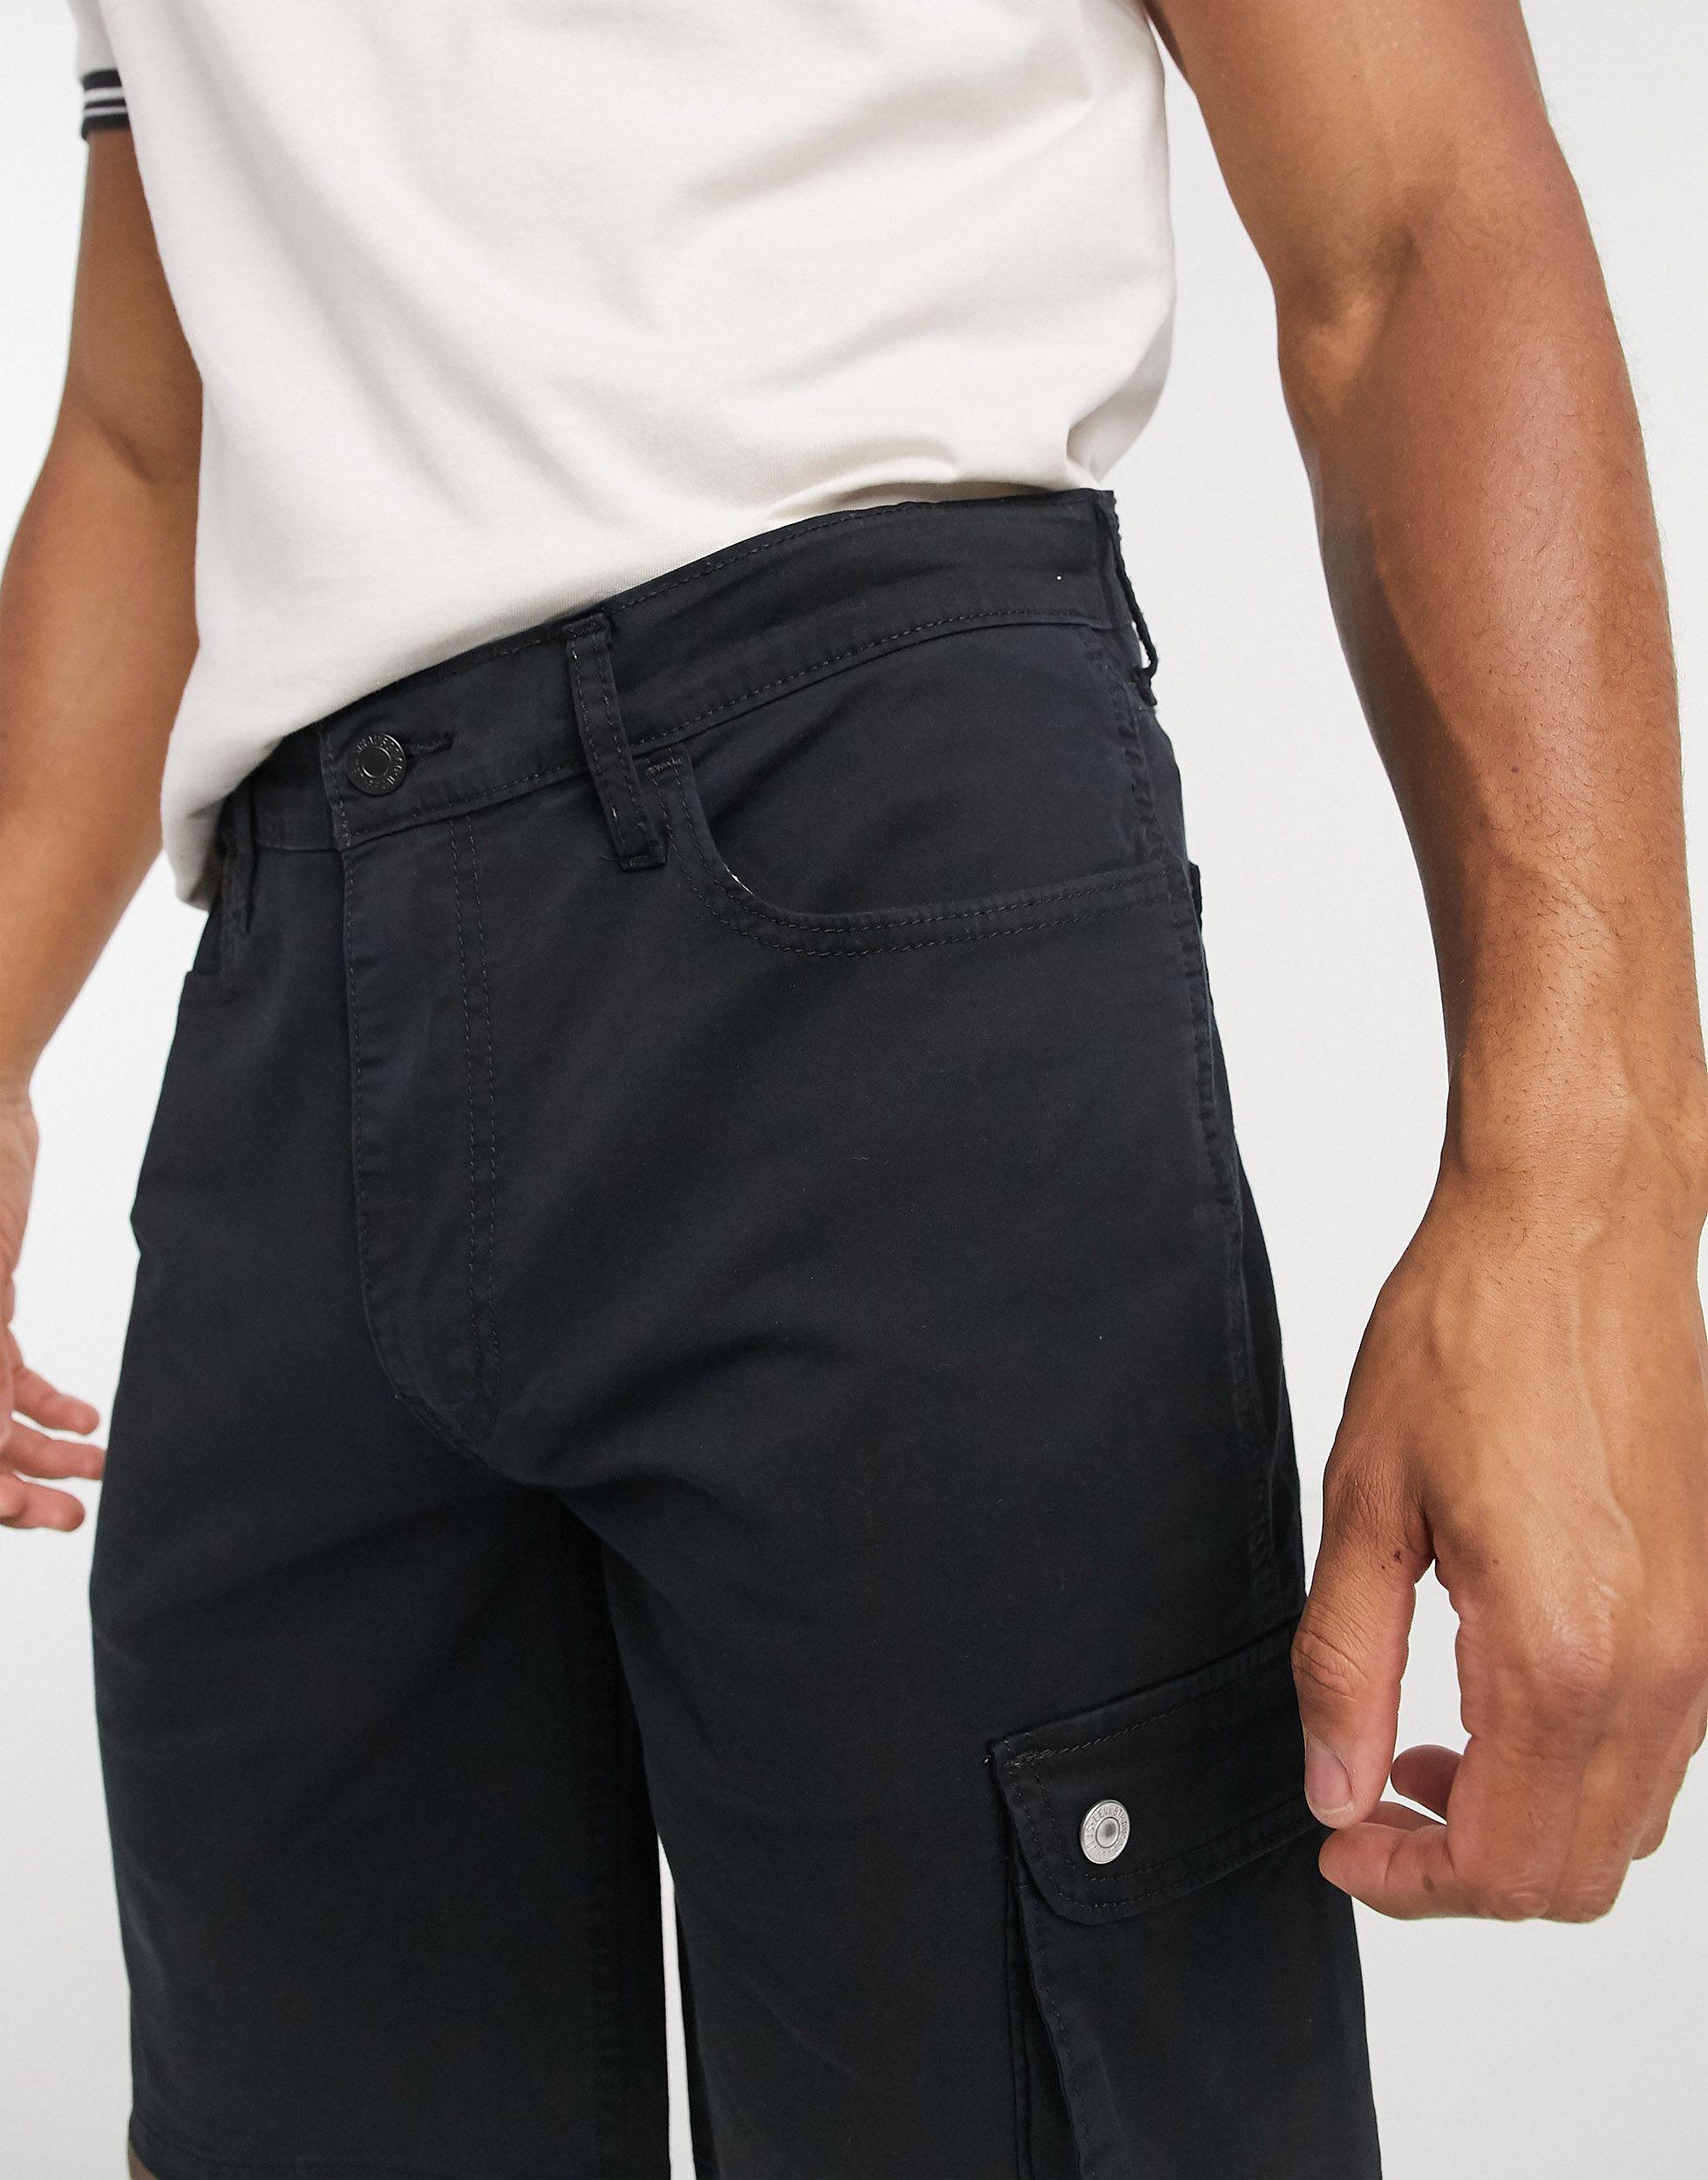 Levi's Utility Cargo Shorts in Black for Men - Lyst